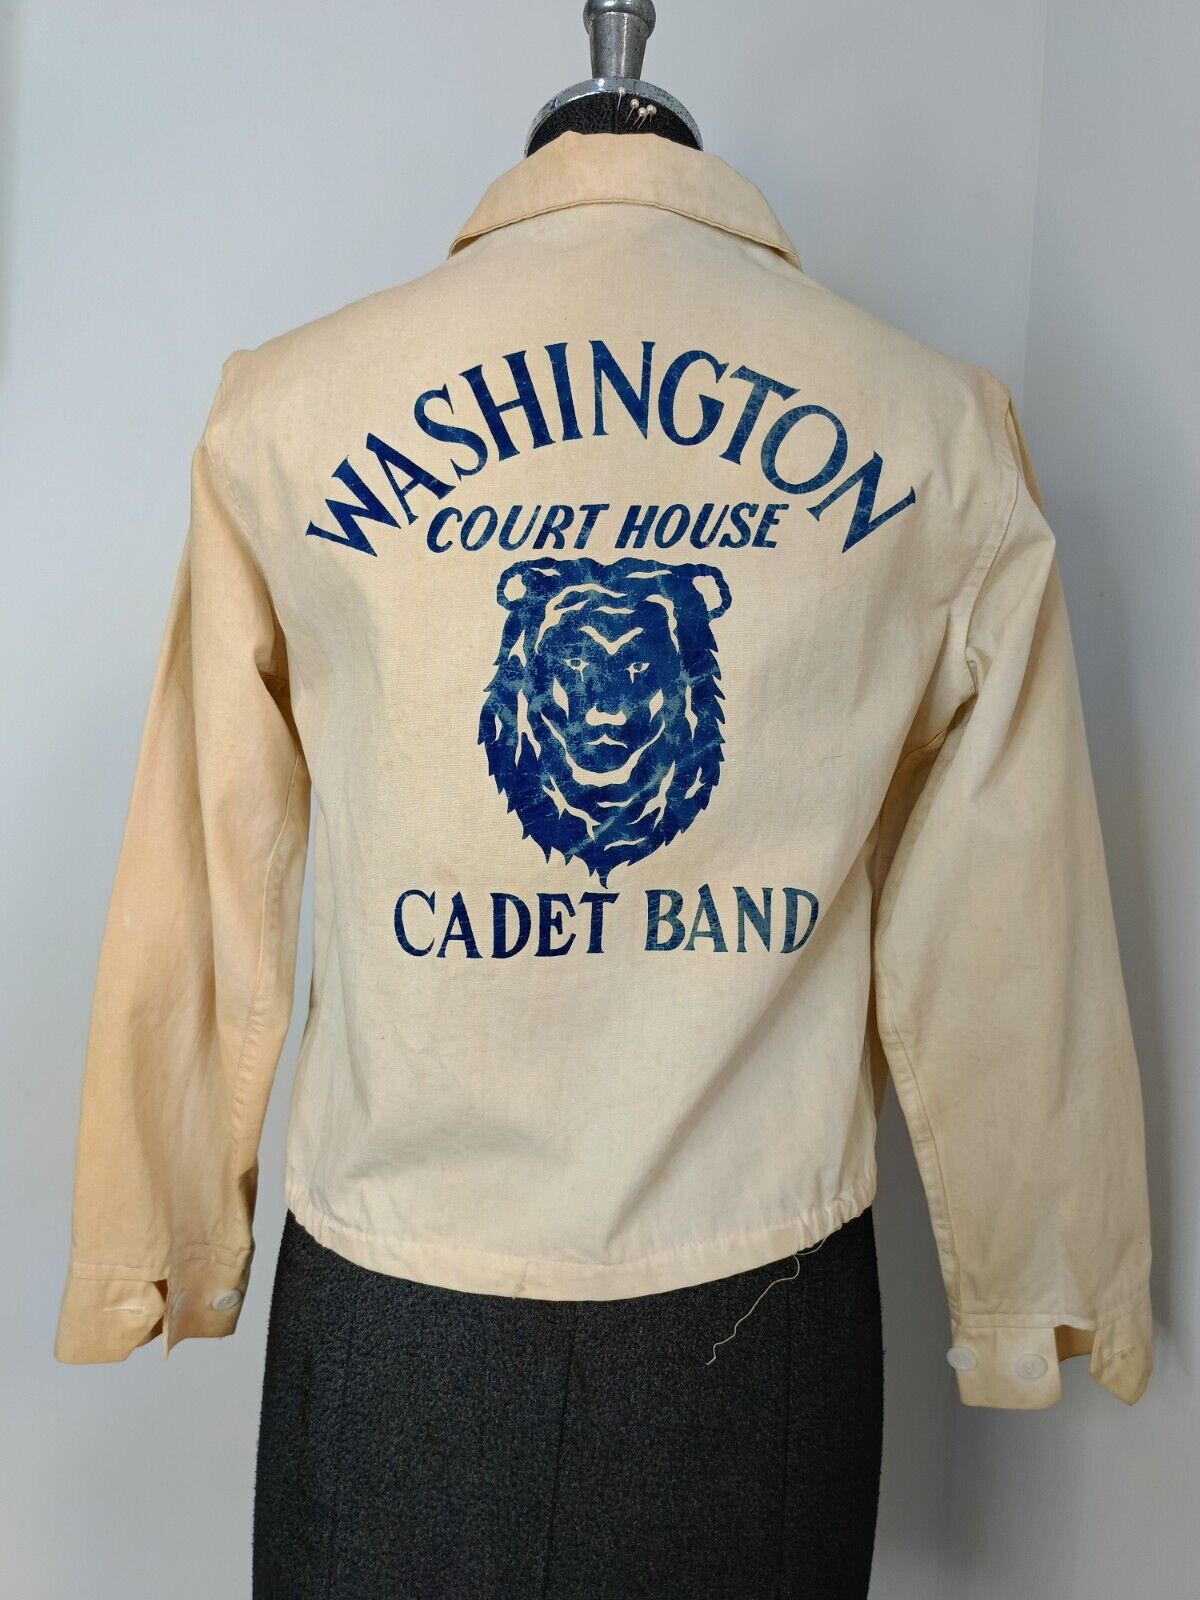 50s Dan River Crown zipper USA 14 Washington Cadet Band court house jacket